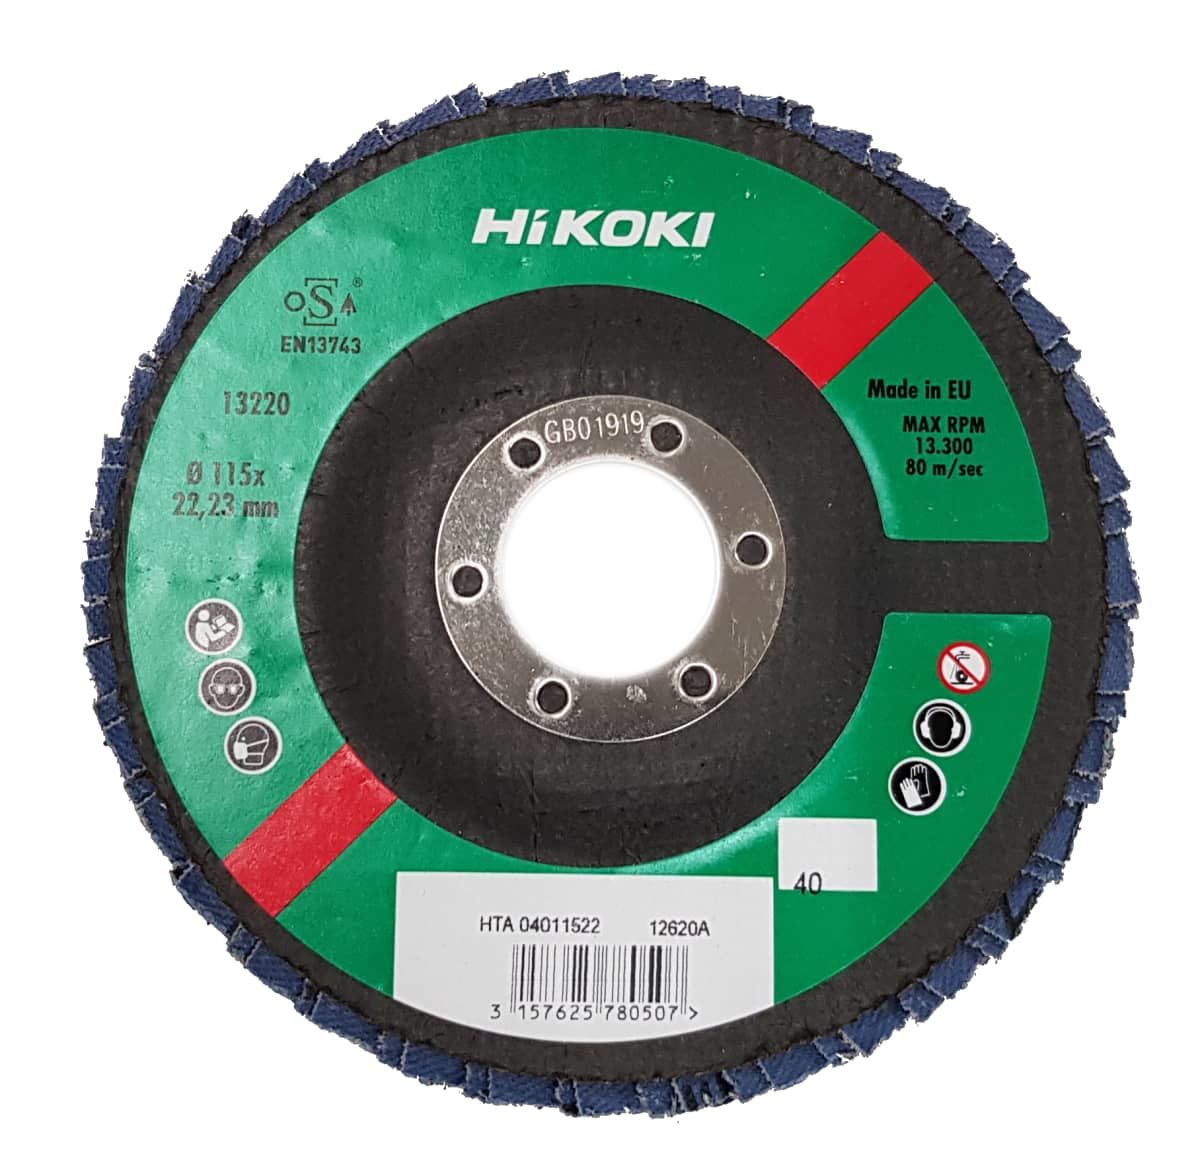 HIKOKI HTA04011522 - Disco abrasivo lamellare per smerigliatrici Ø 115 mm